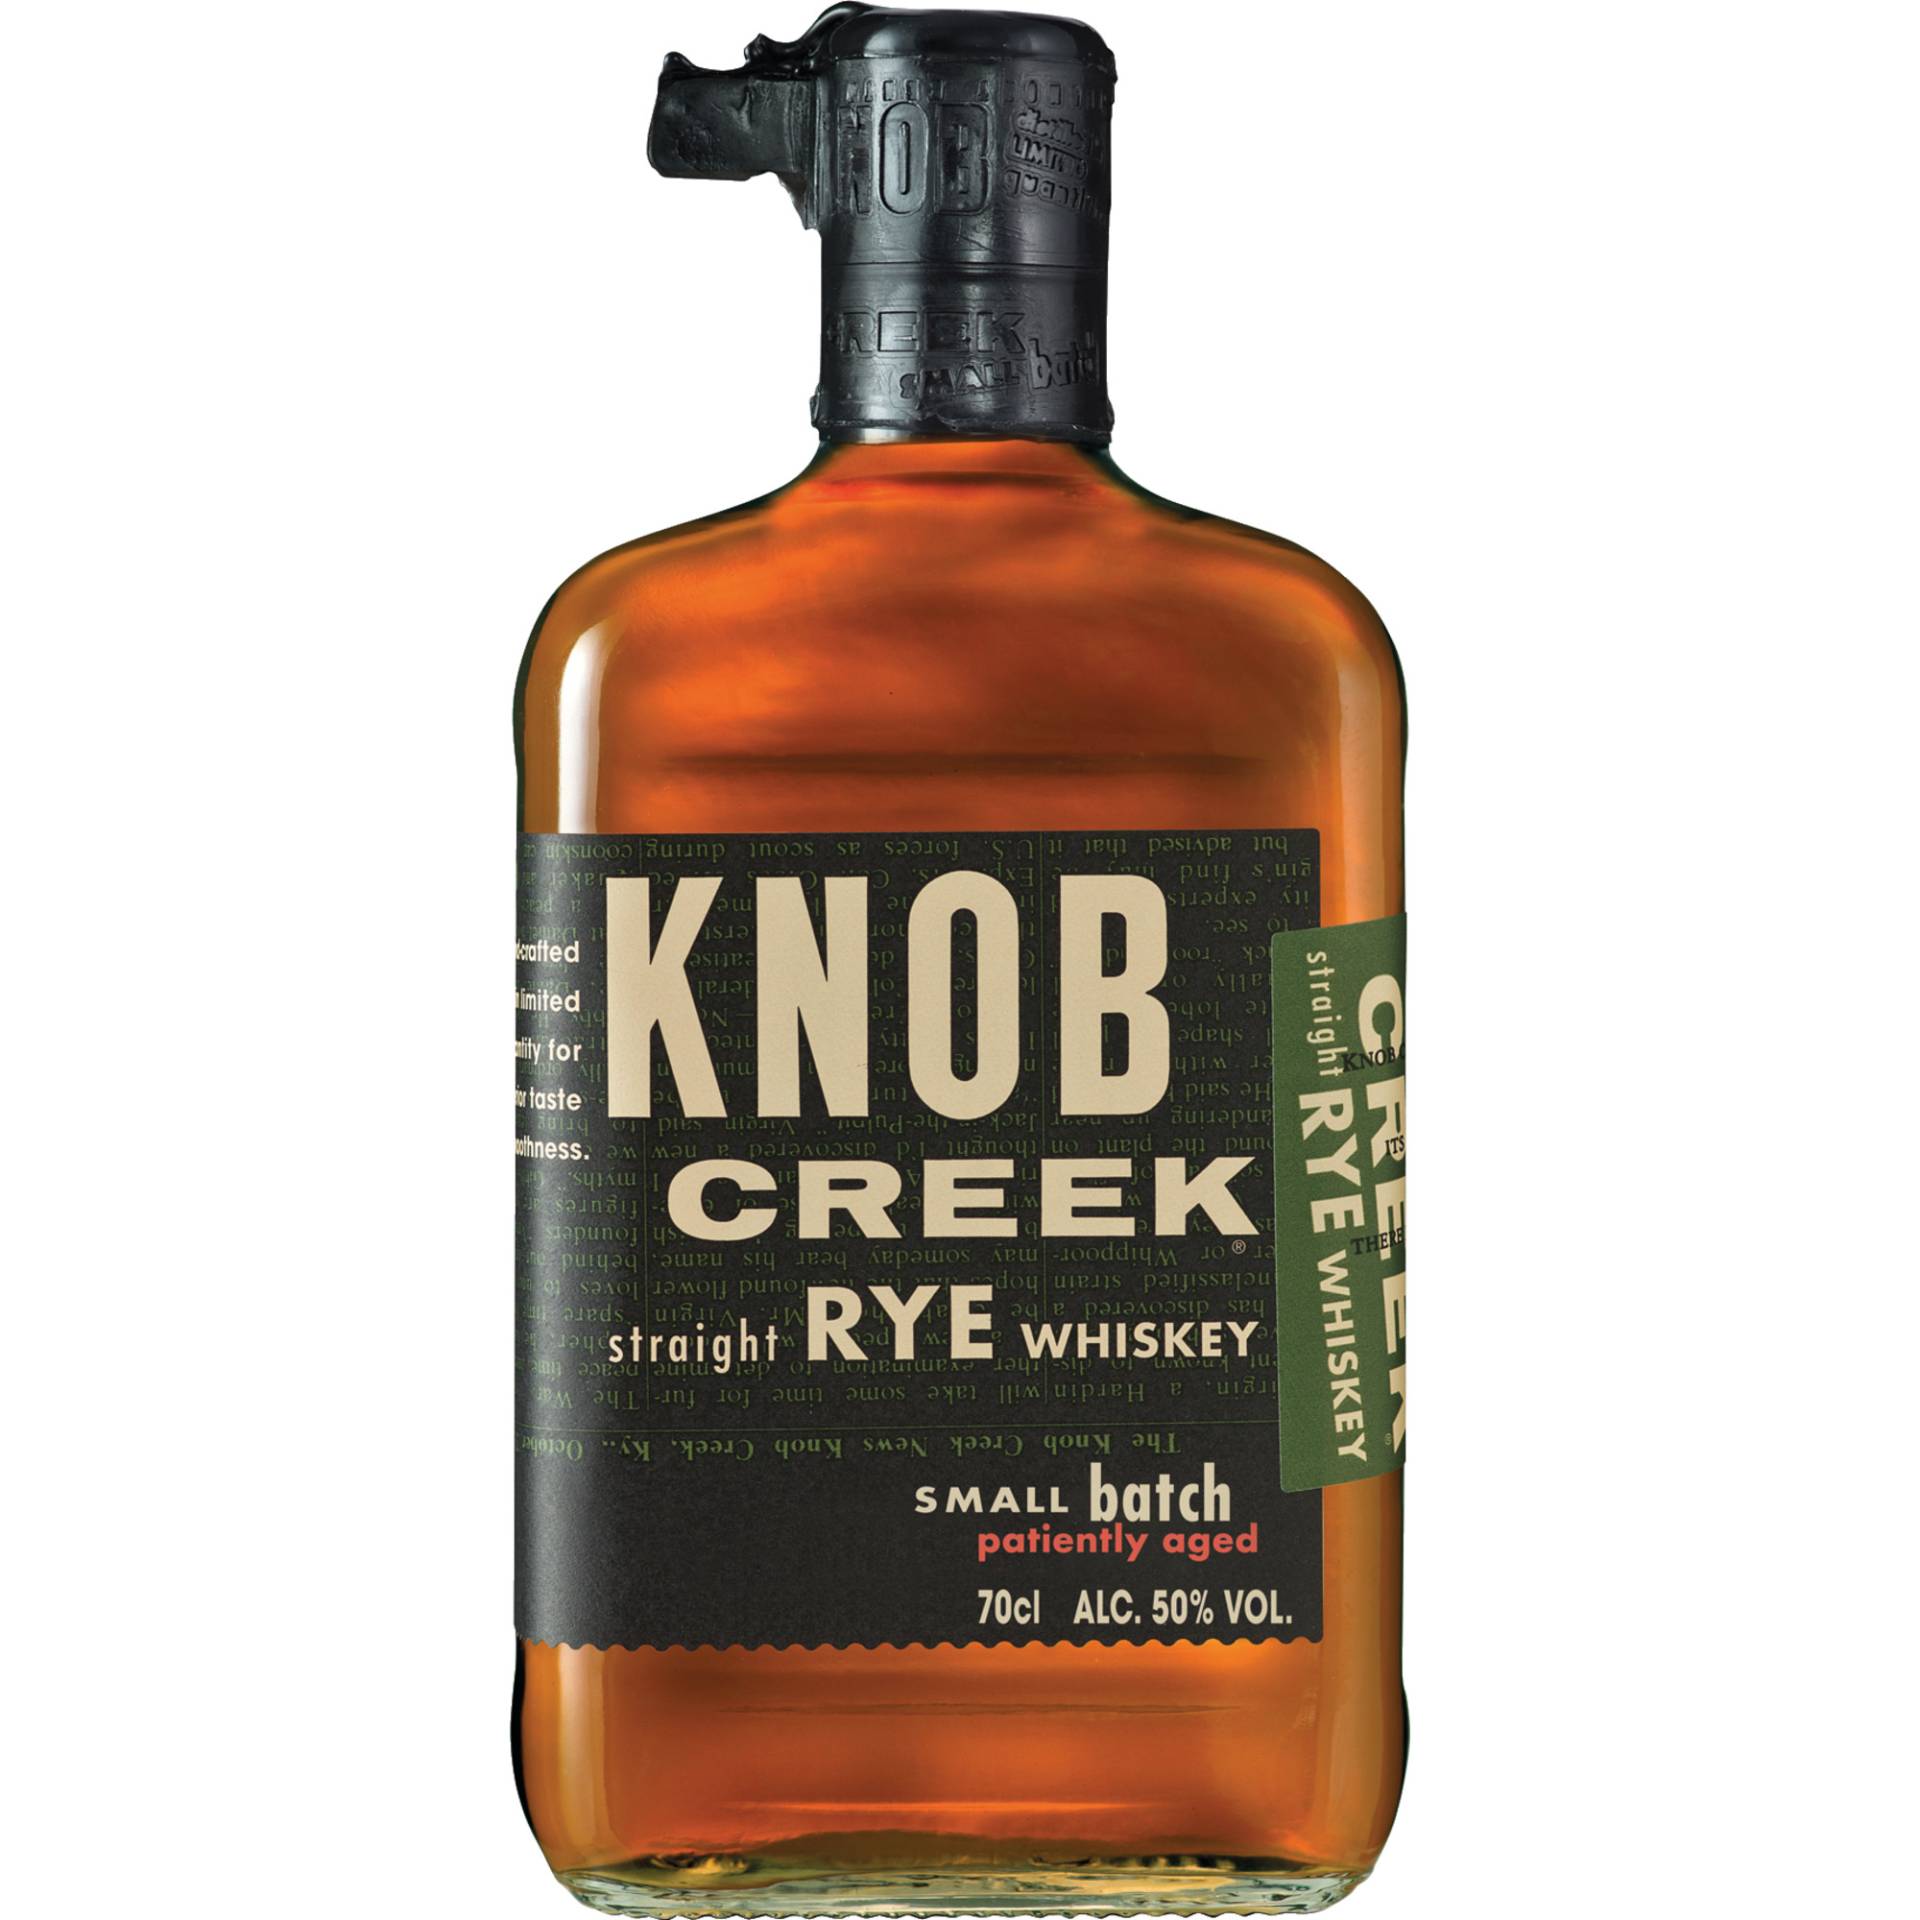 Knob Creek Kentucky Straight Rye Whiskey, 0,7 L, 50% Vol., Kentucky, Spirituosen von Knob Creek Distillery, Clermont, Kentucky, USA / BEAM INC.UK LTD. 310 St. Vincent Street Glasgow, G2 5RG, UK